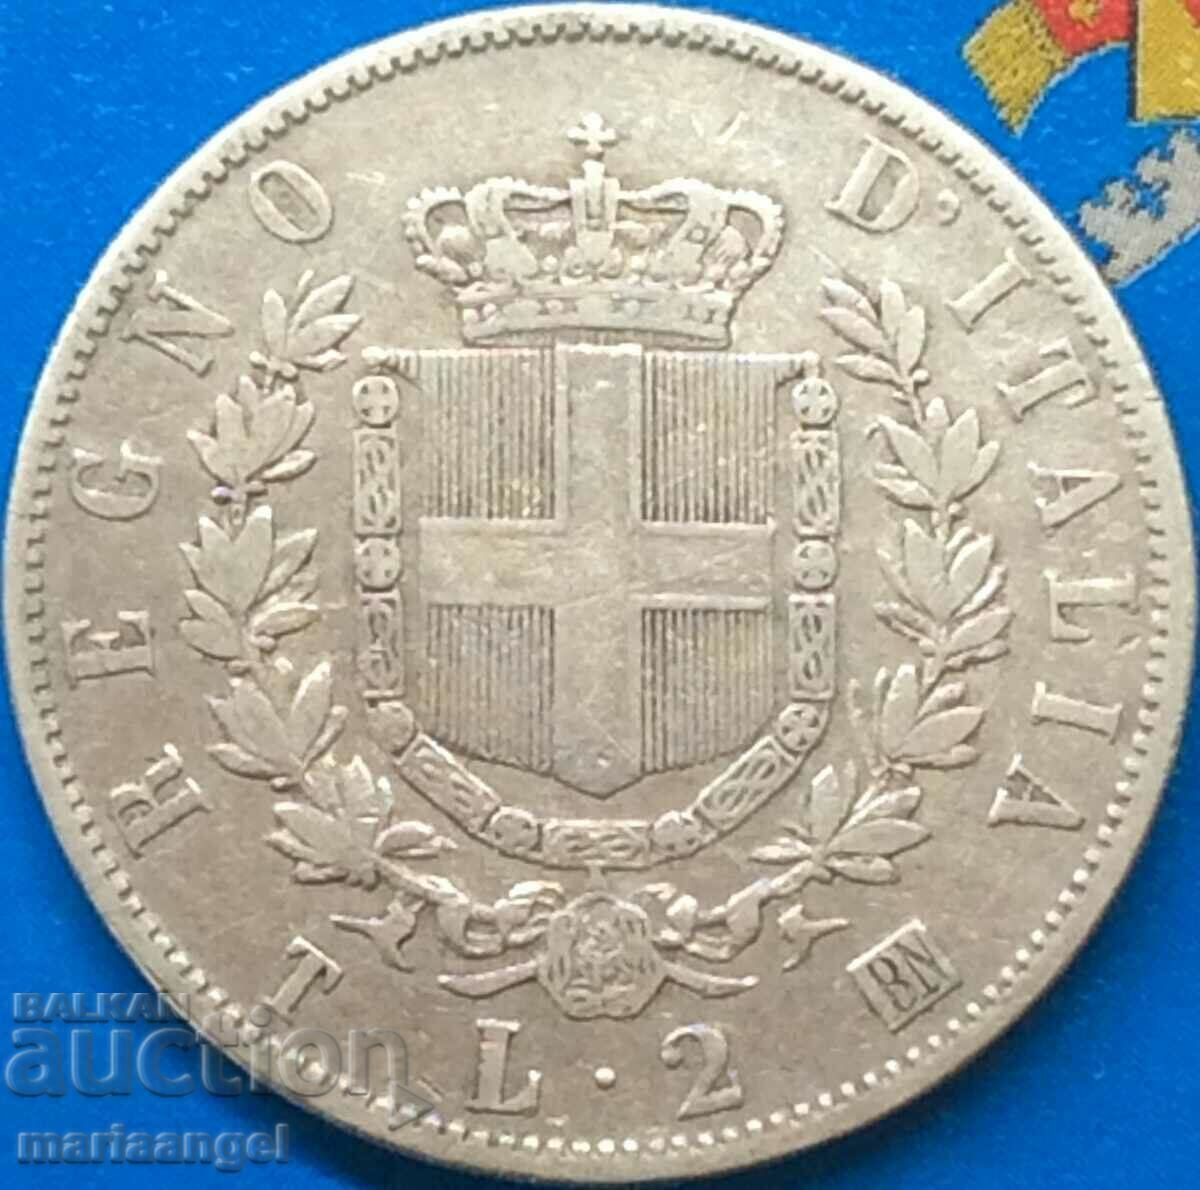 2 lire 1863 T - Torino Italia "SHIELD" Shield BN - Birmingham Ag